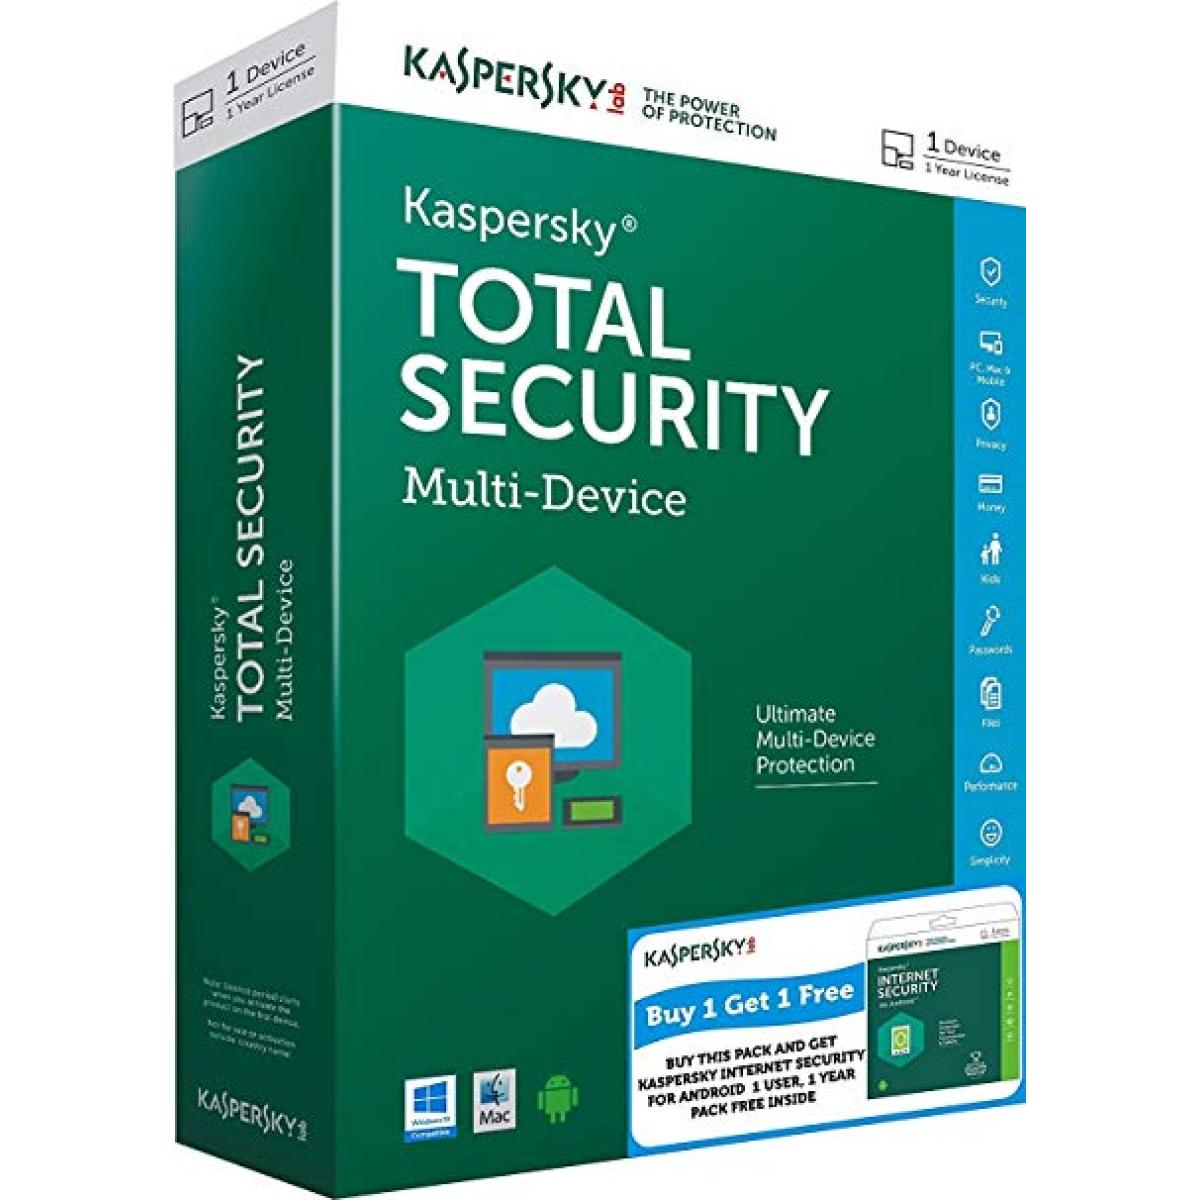 Kaspersky Total Security 10 Devices 1 Year 2018 +1 Server (Kasper-Total Security/10 )